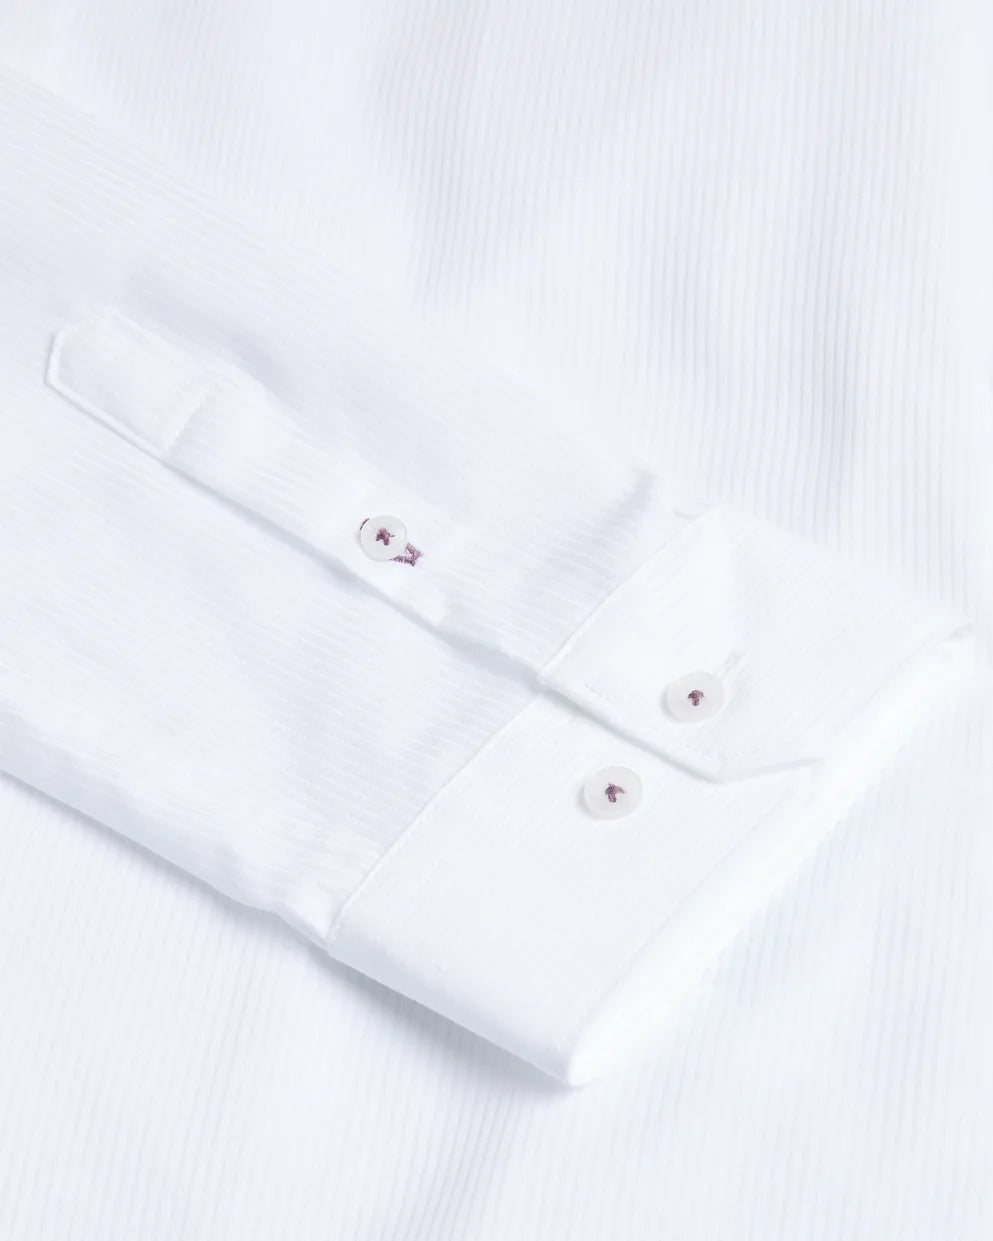 Ted Baker Haless White Striped Dress Shirt